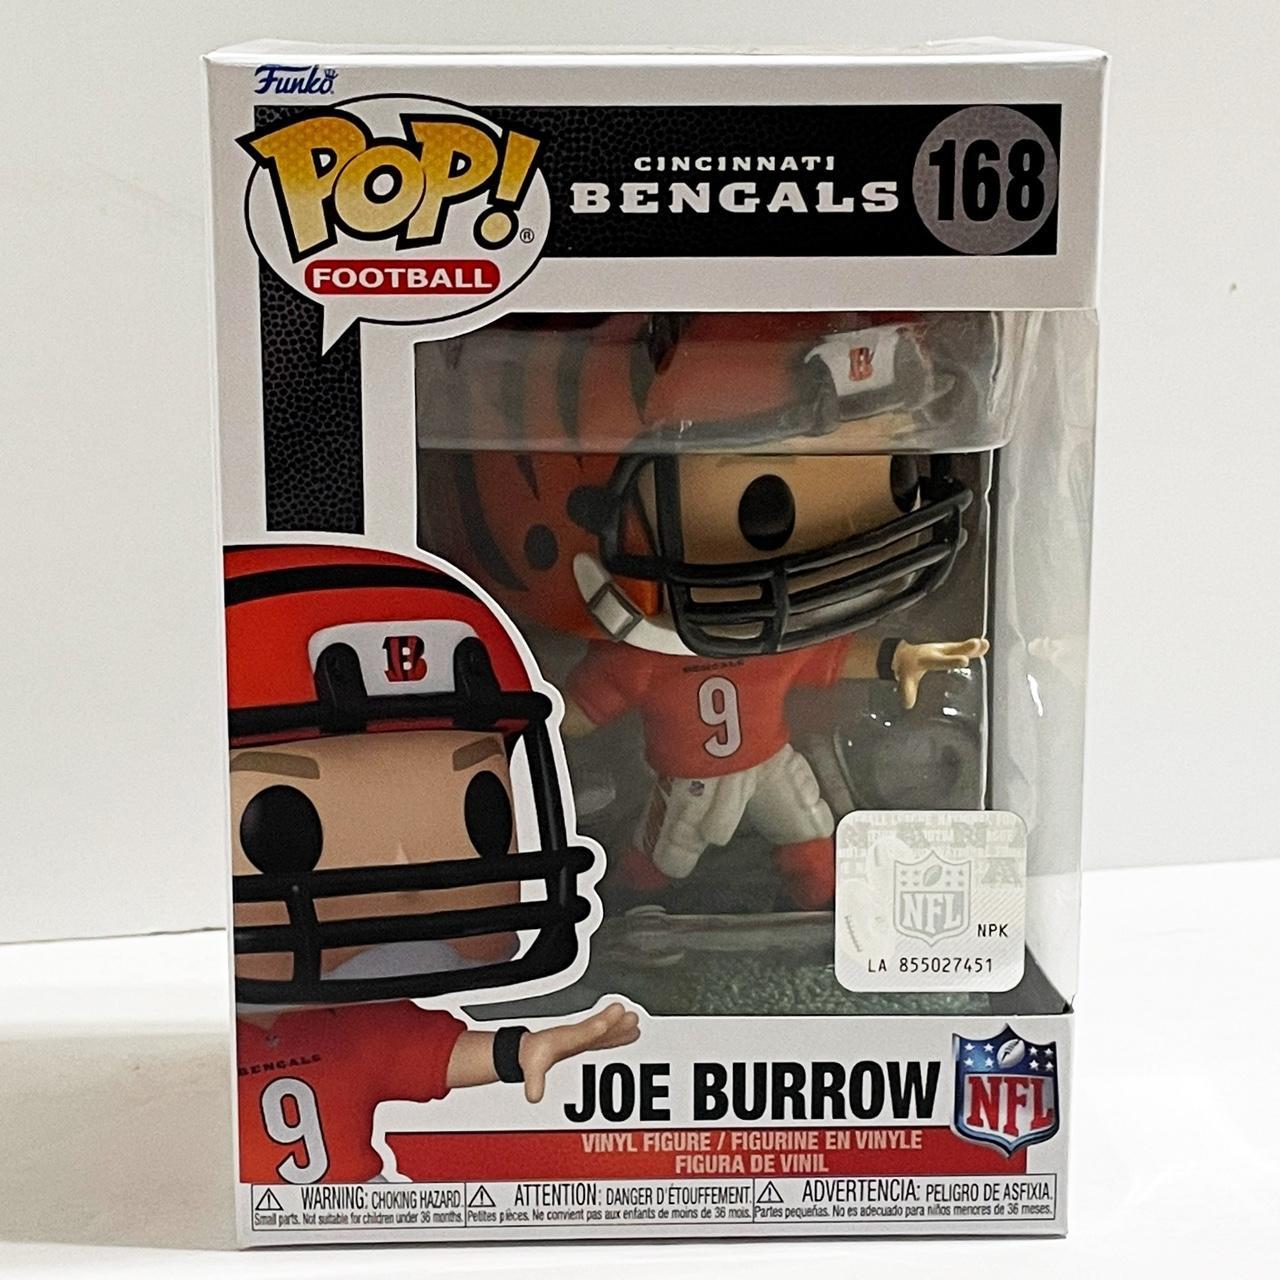 Funko Pop! NFL: Bengals - Joe Burrow